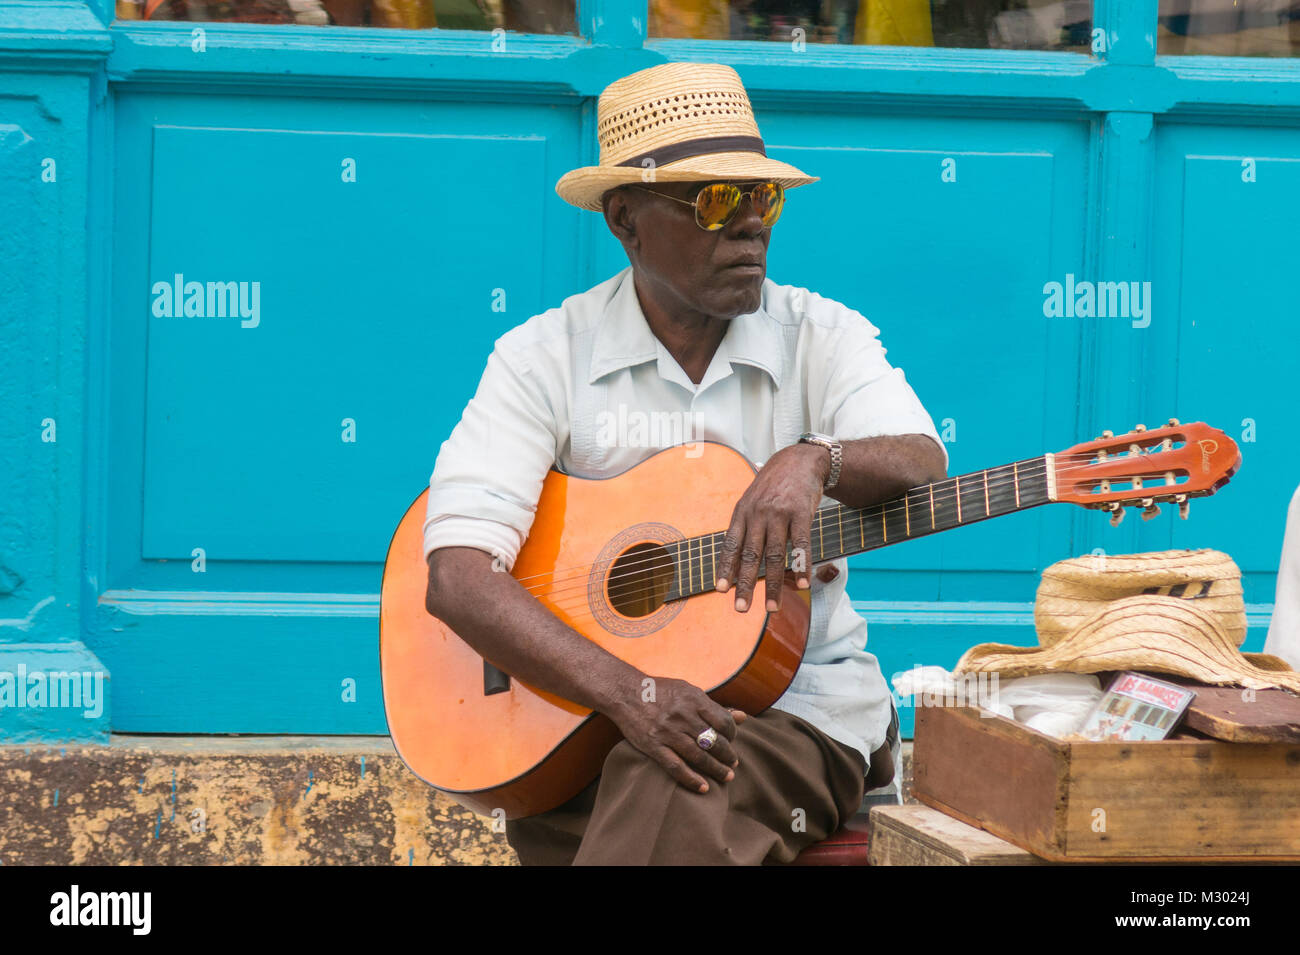 HAVANA, CUBA - JANUARY 16, 2017: Street musician perform for tourists and tips in Old Havana, Havana, Cuba Stock Photo